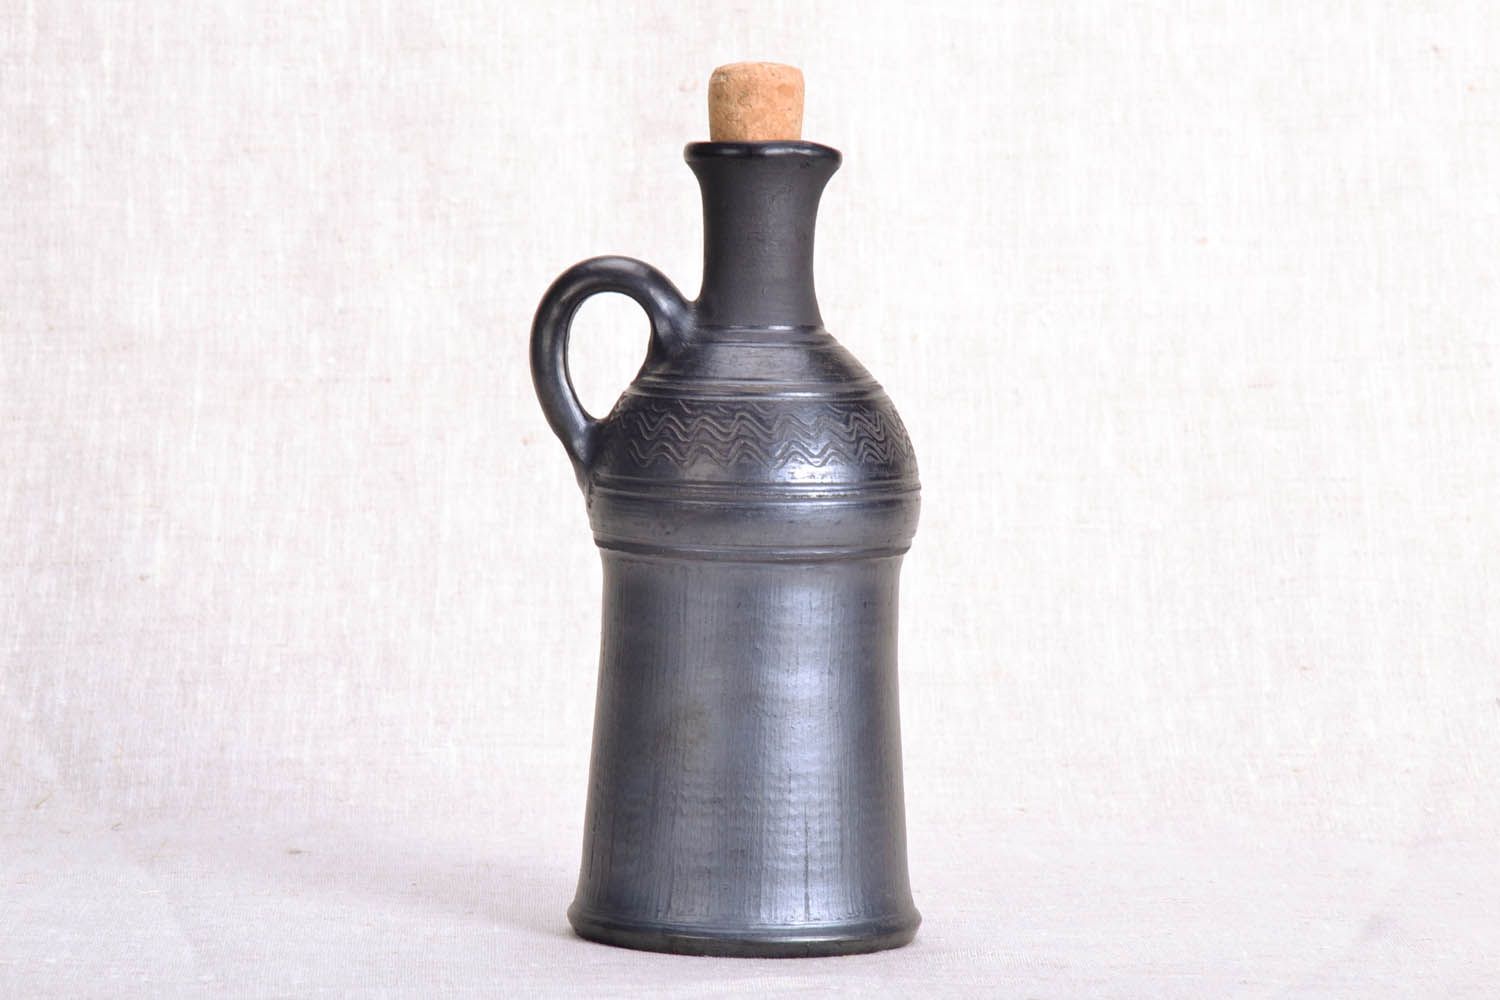 Garrafa de cerâmica para azeite e vinagre feita de barro foto 2